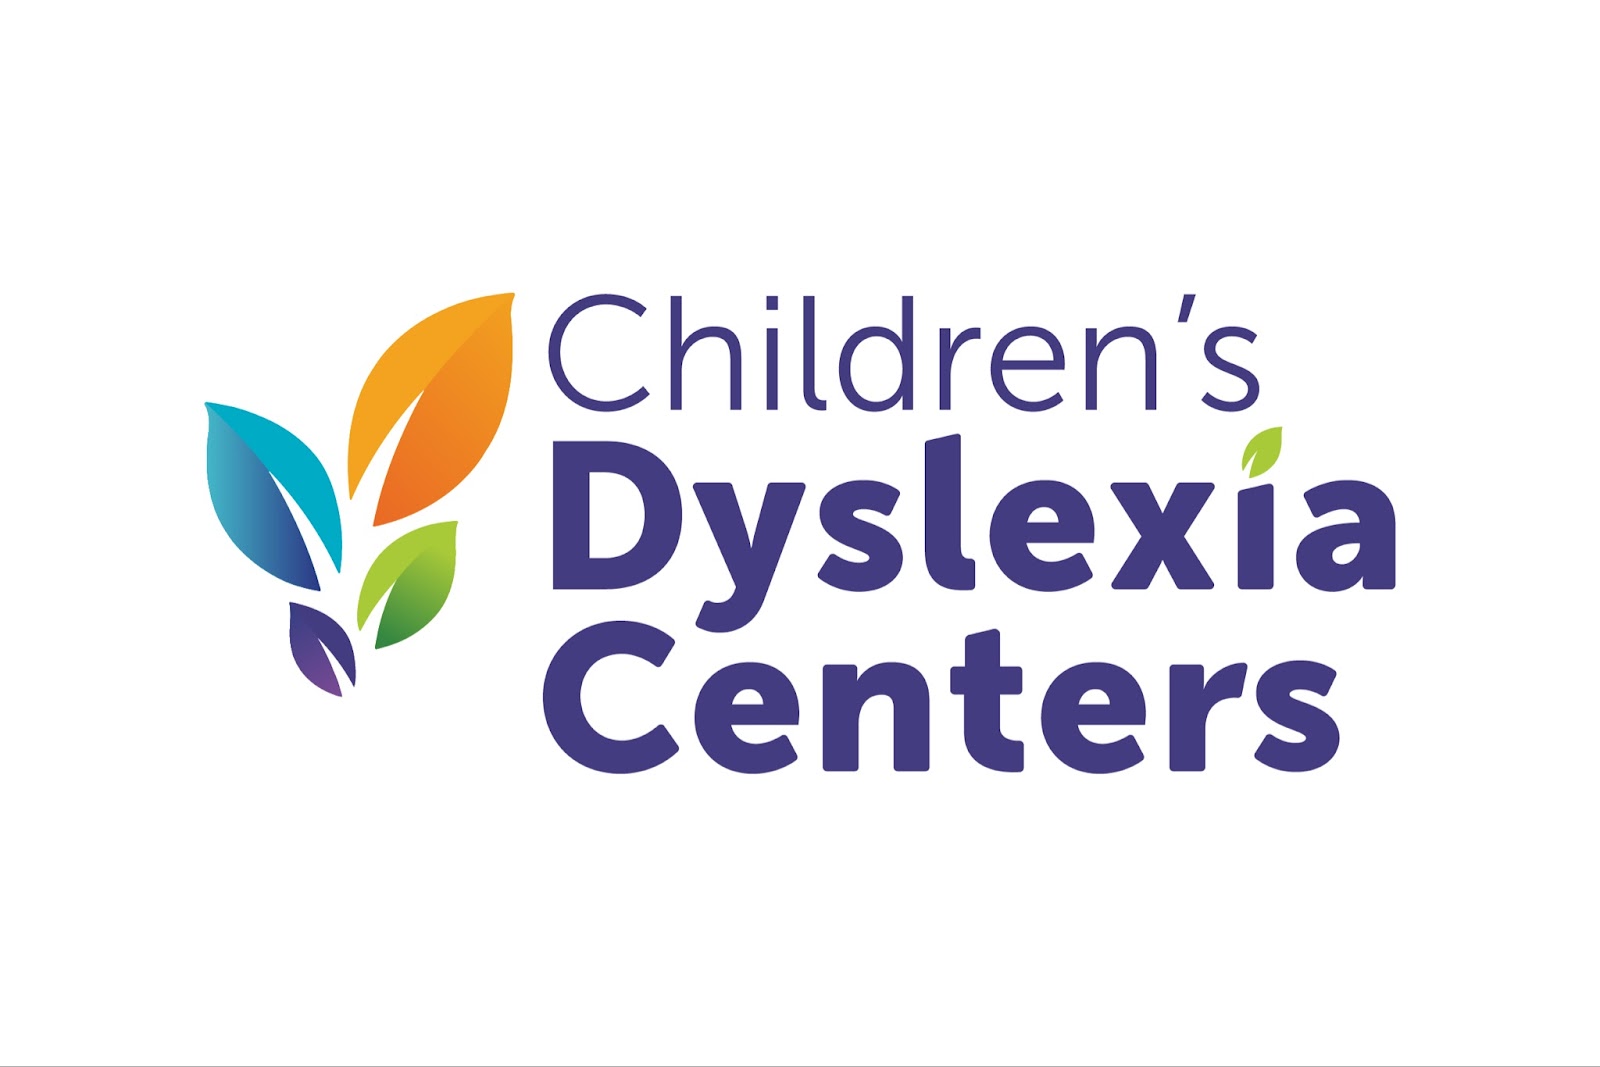 The Children's Dyslexia Centers logo.